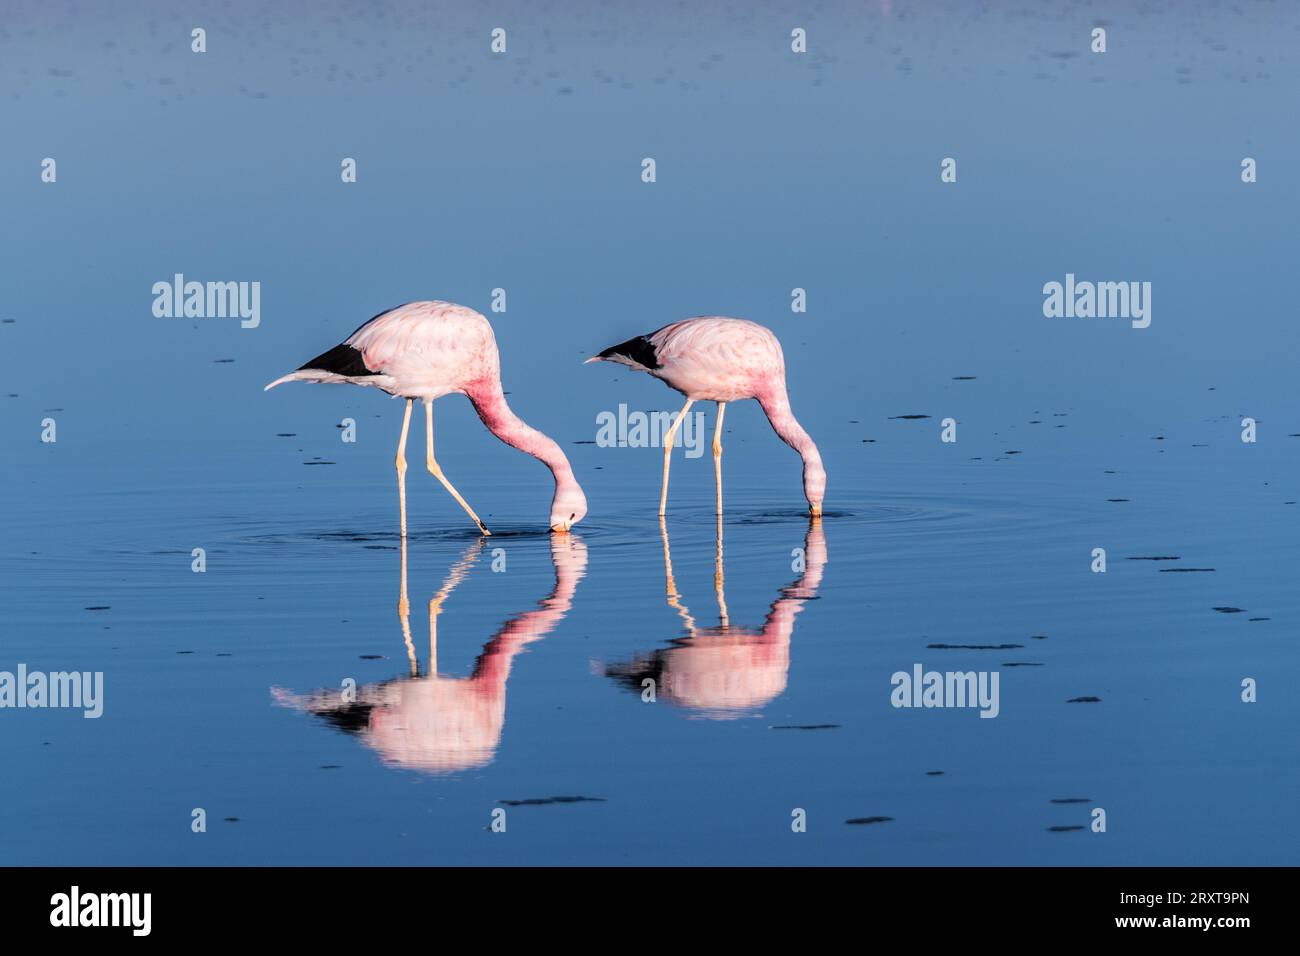 Two flamingos in the Atacama desert Stock Photo